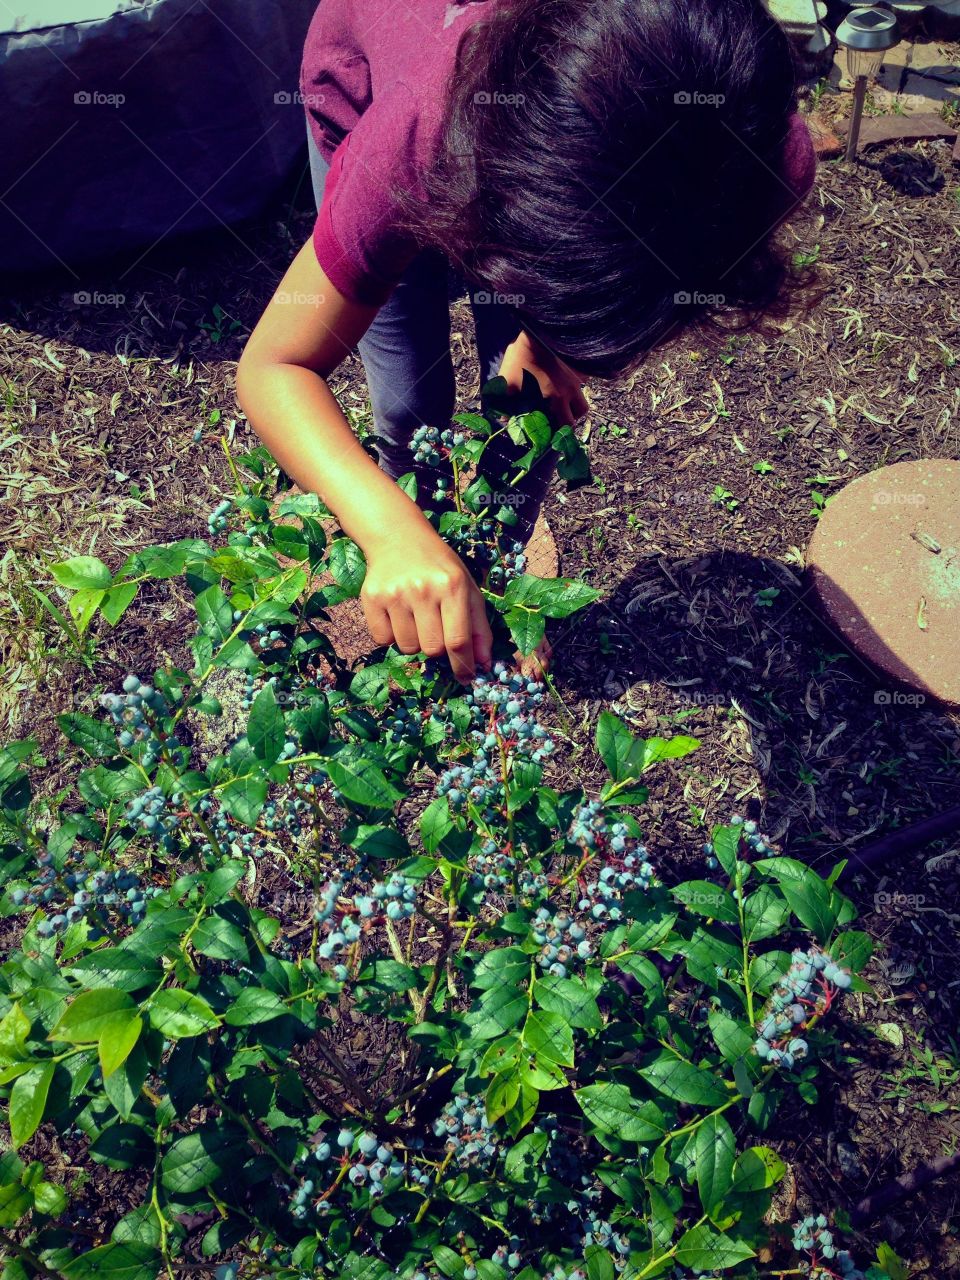 Picking blueberries. Child picking blueberries